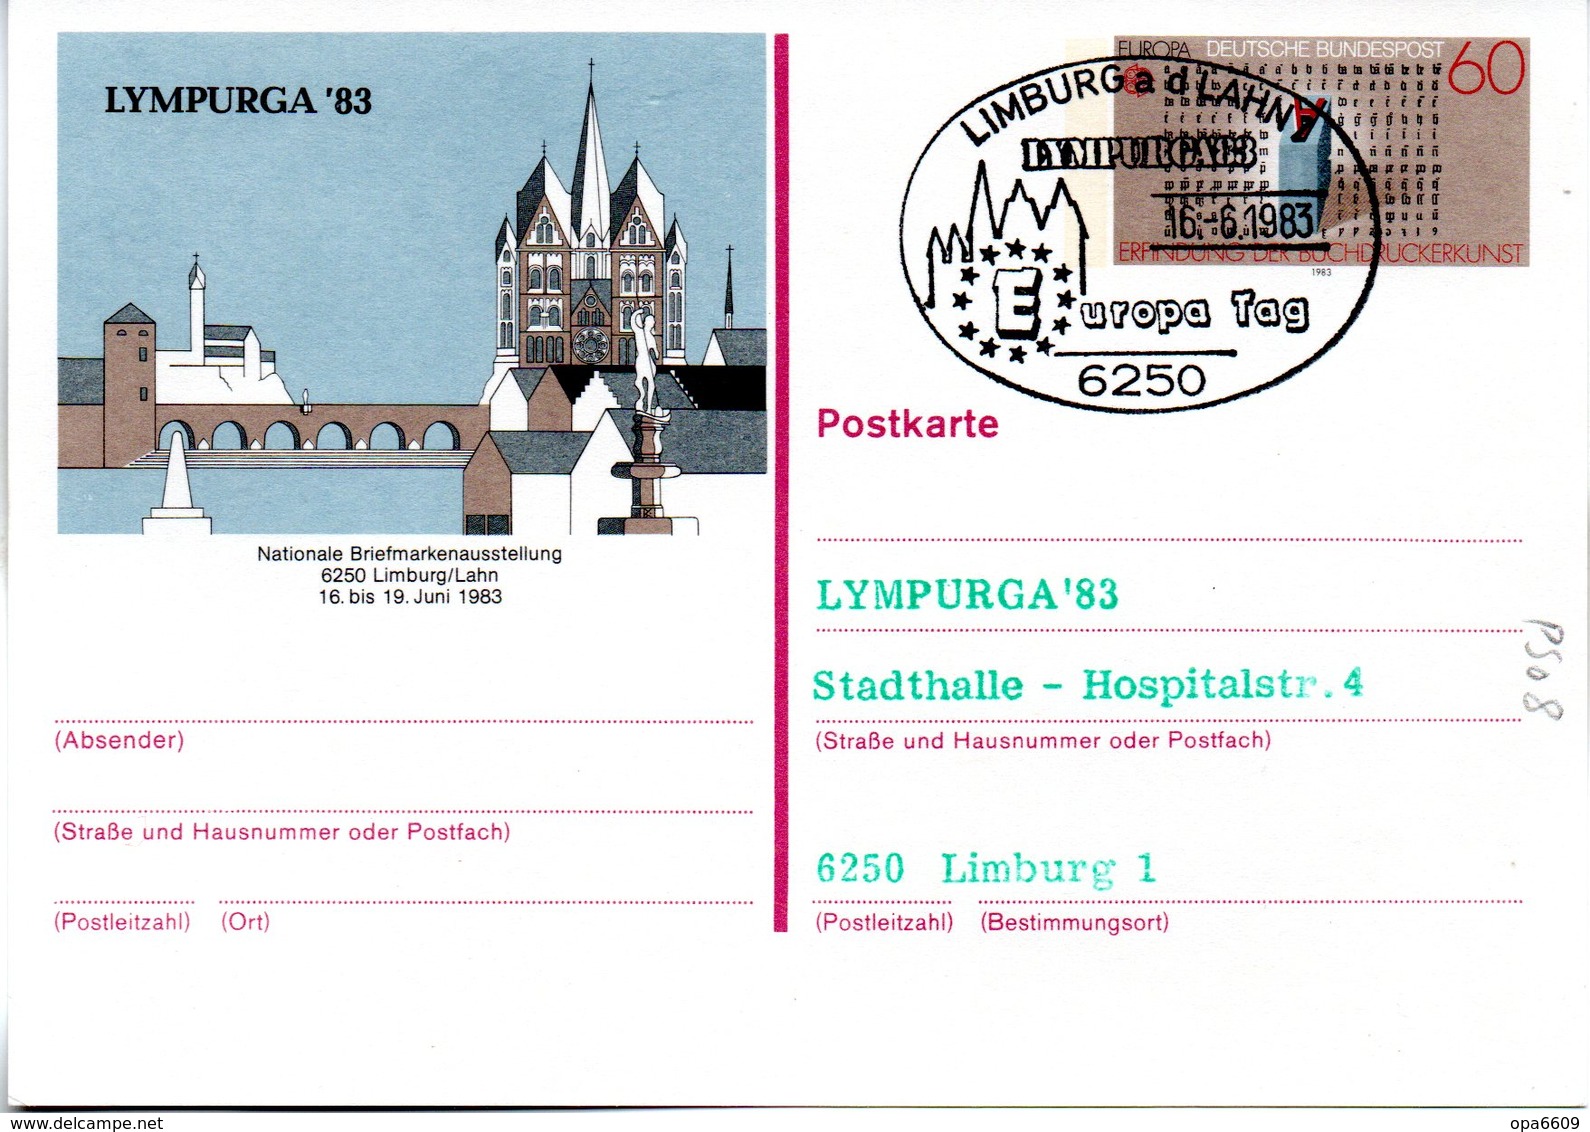 BRD Amtliche GZS-Sonderpostkarte PSo8 "LYMPURGA'83 In Limburg/Lahn" WSt "Europamarke 1983"60(Pf), ESSt 16.6.1986 LIMBURG - Postkarten - Gebraucht